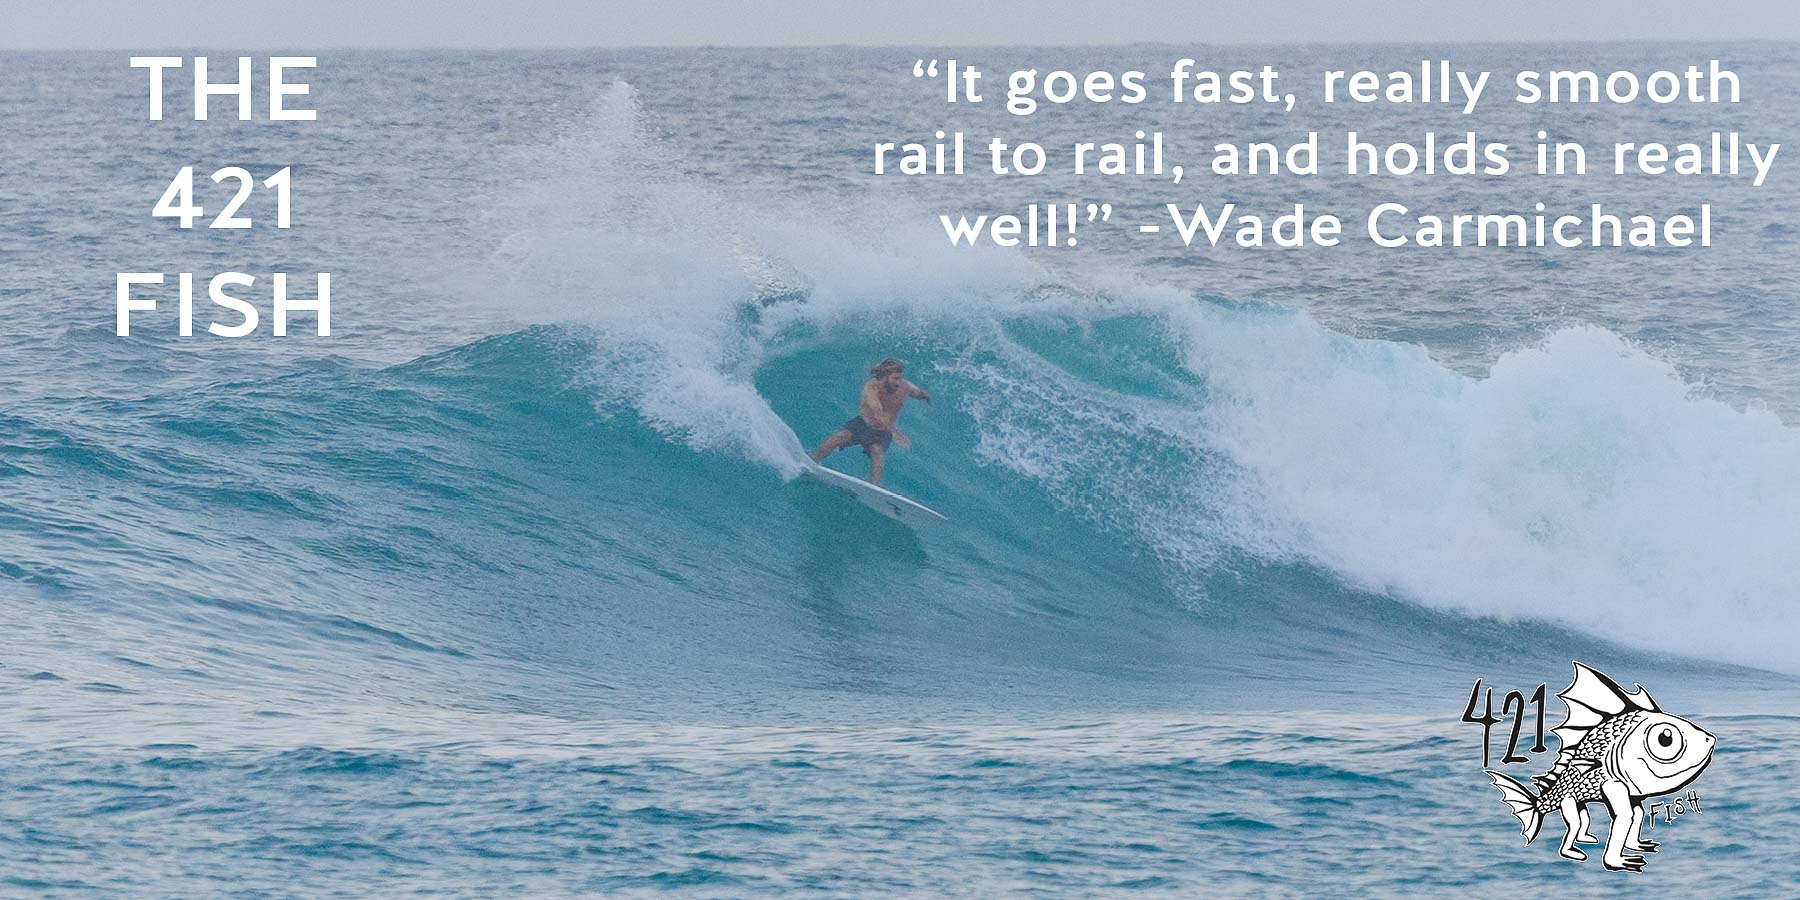 Wade Carmichael riding the 421 Fish in Salina Cruz - Rusty Surfboards - Desktop